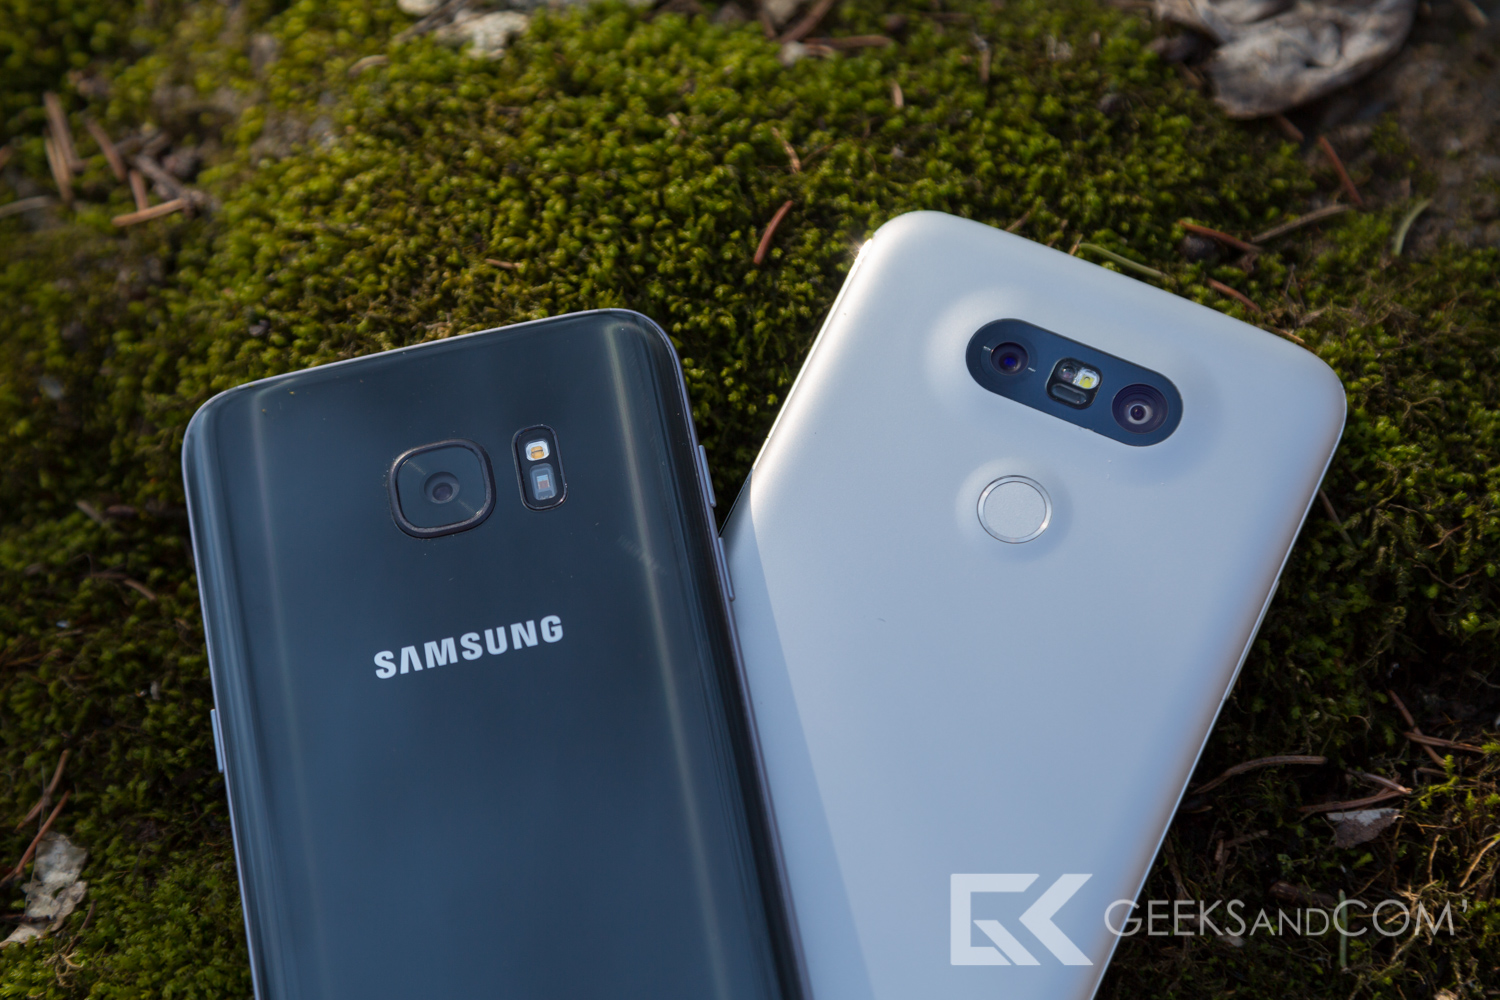 LG G5 vs Samsung Galaxy S7 edge